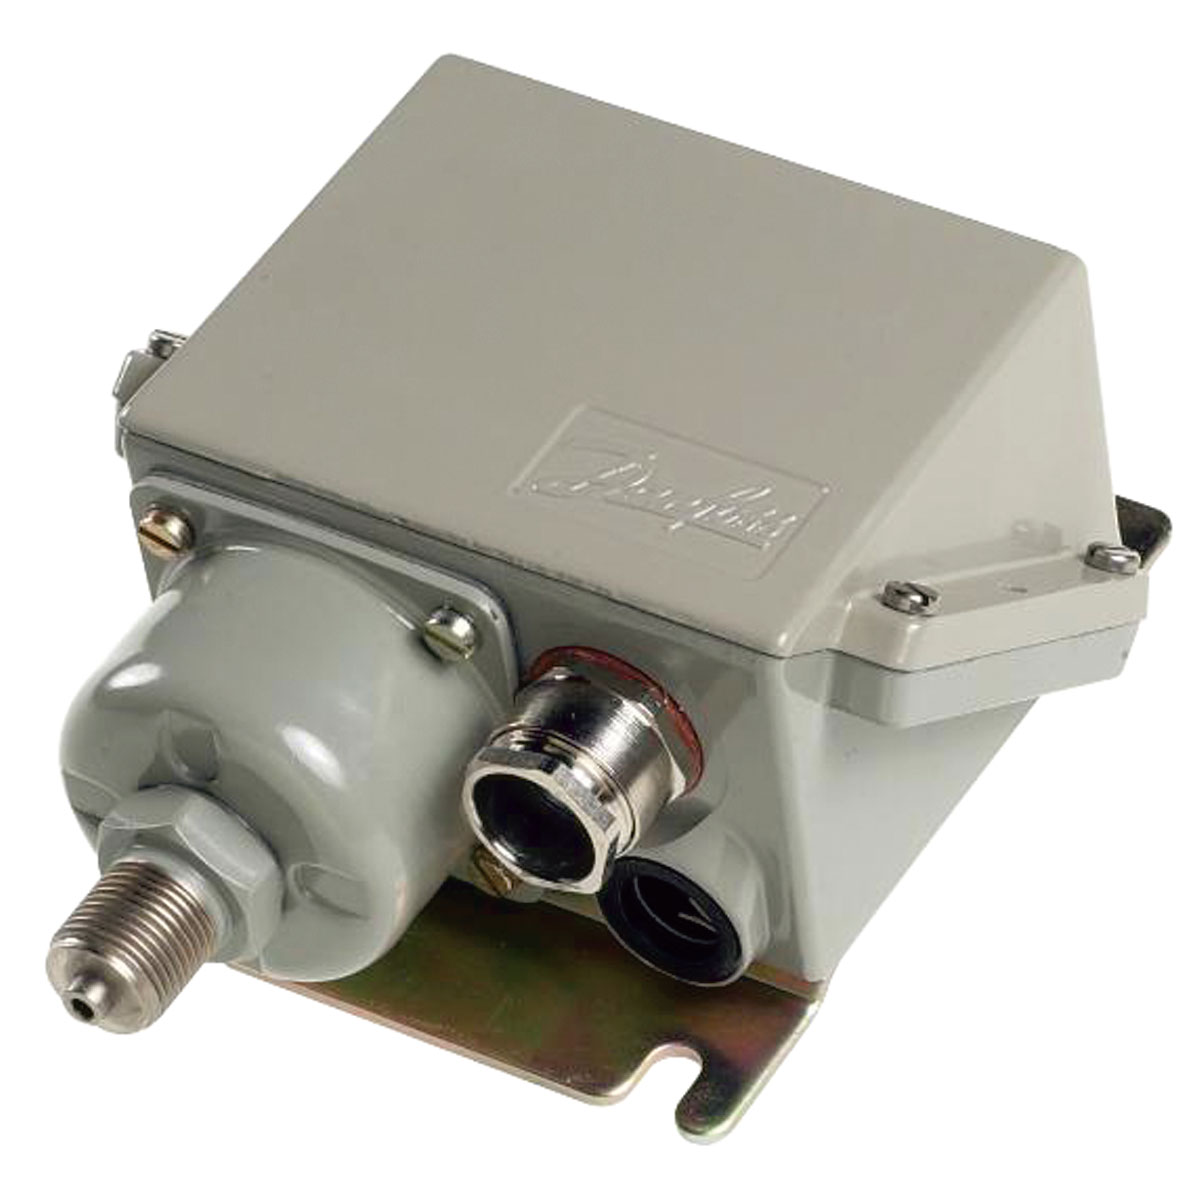 KPS39-3107 Pressure Switch 1/4" 10-35 Bar